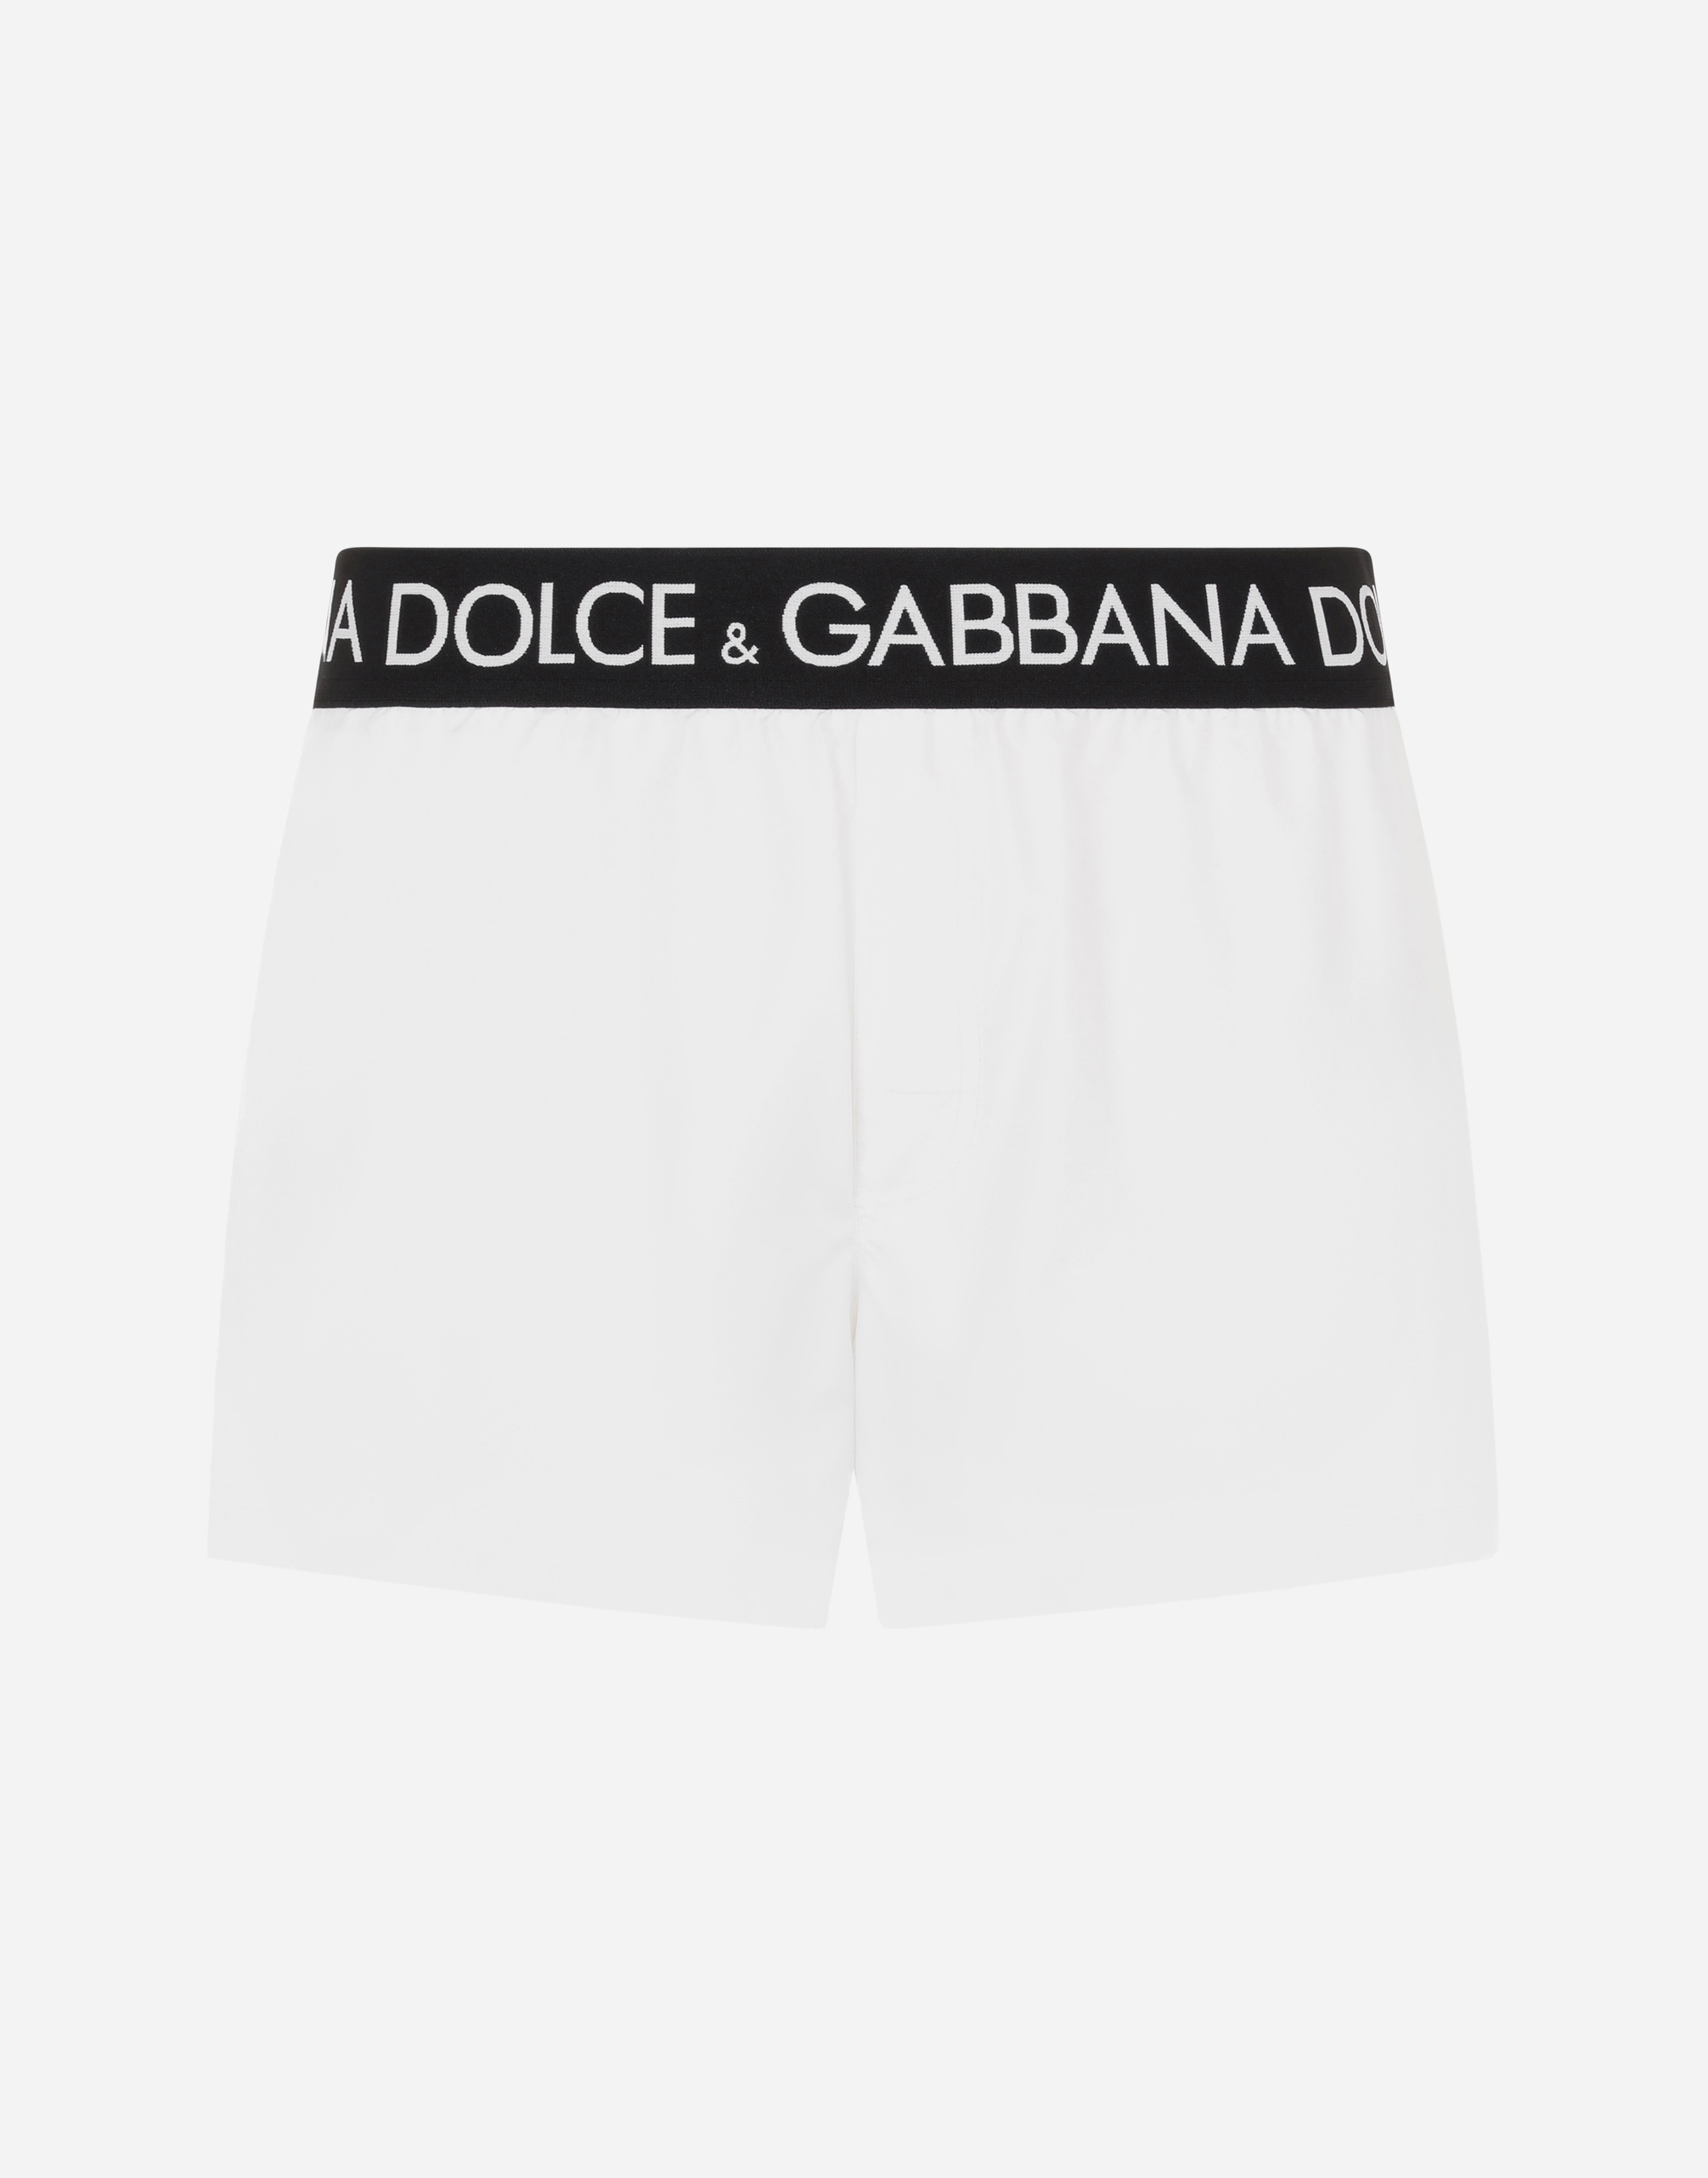 Dolce & Gabbana Short Swim Trunks With Branded Stretch Waistband In White